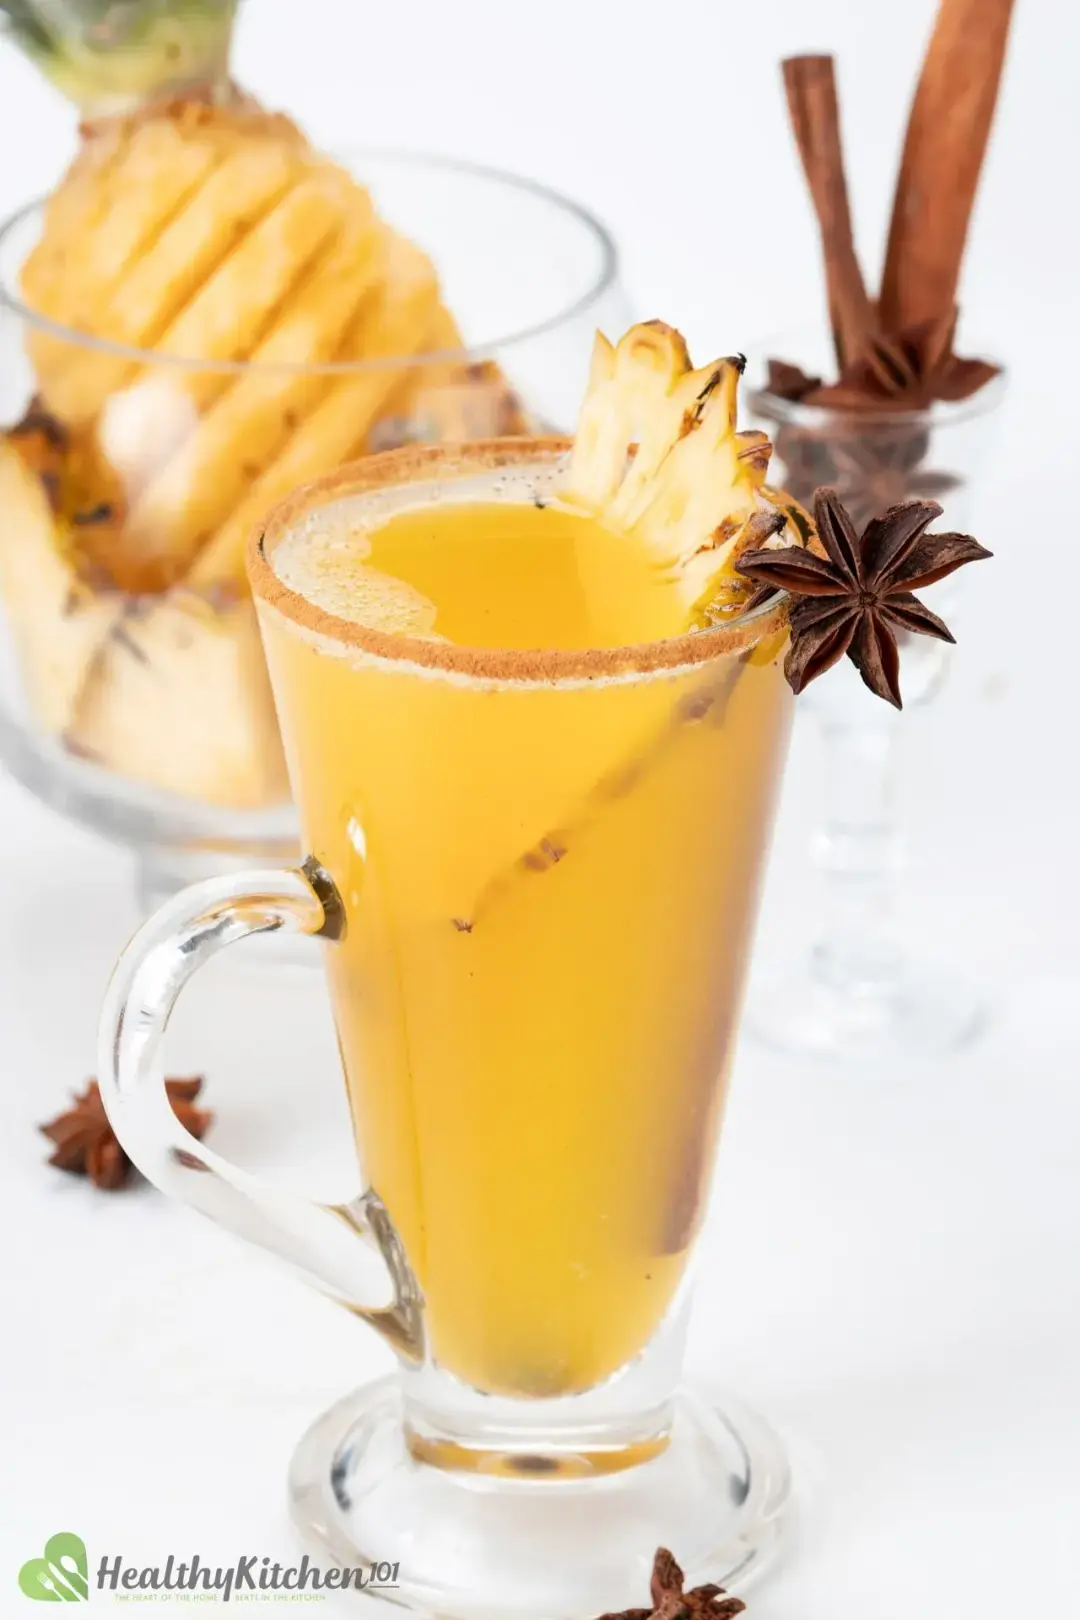 Rum and Pineapple Juice Recipe